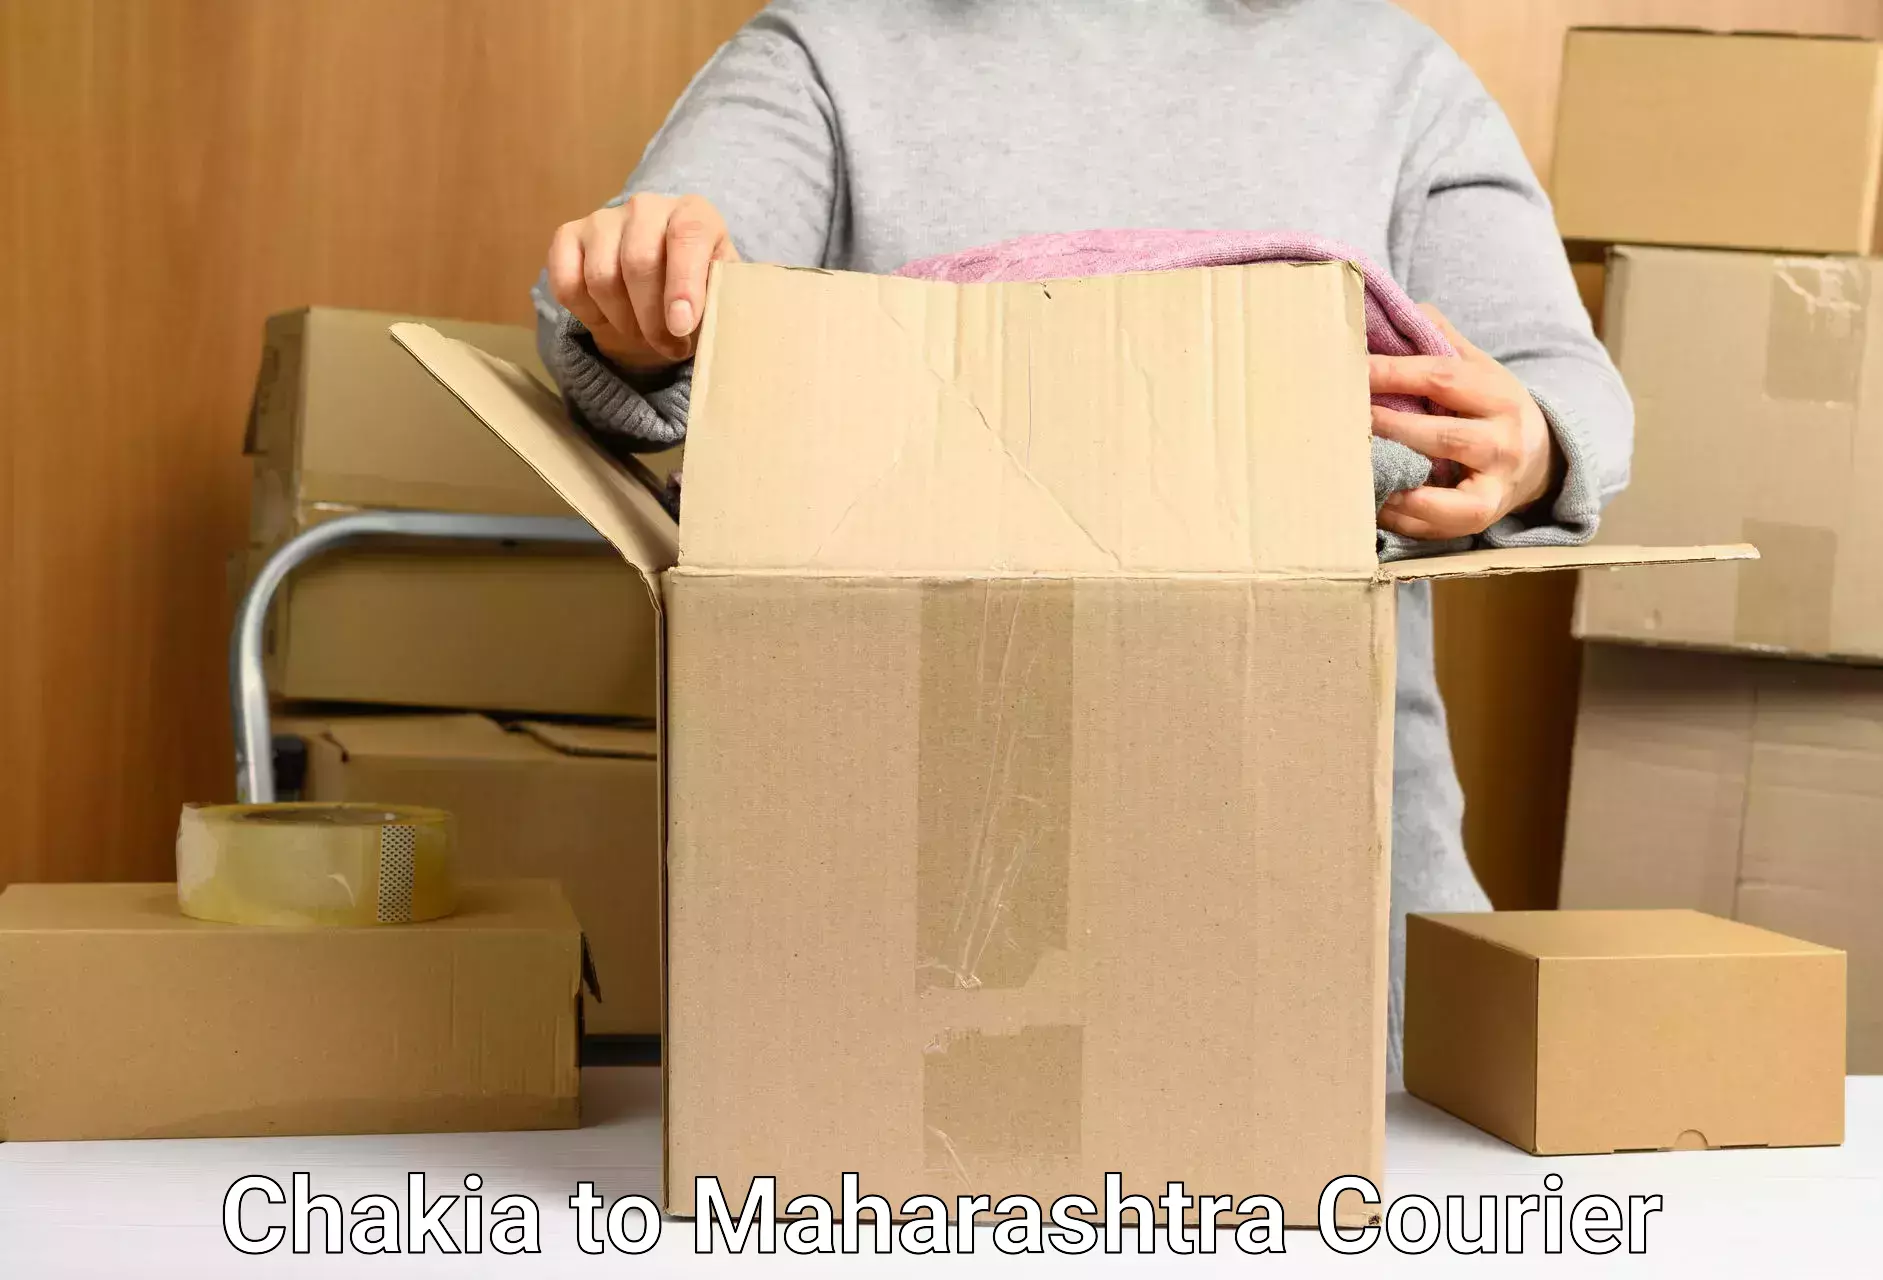 Premium courier services in Chakia to Maharashtra